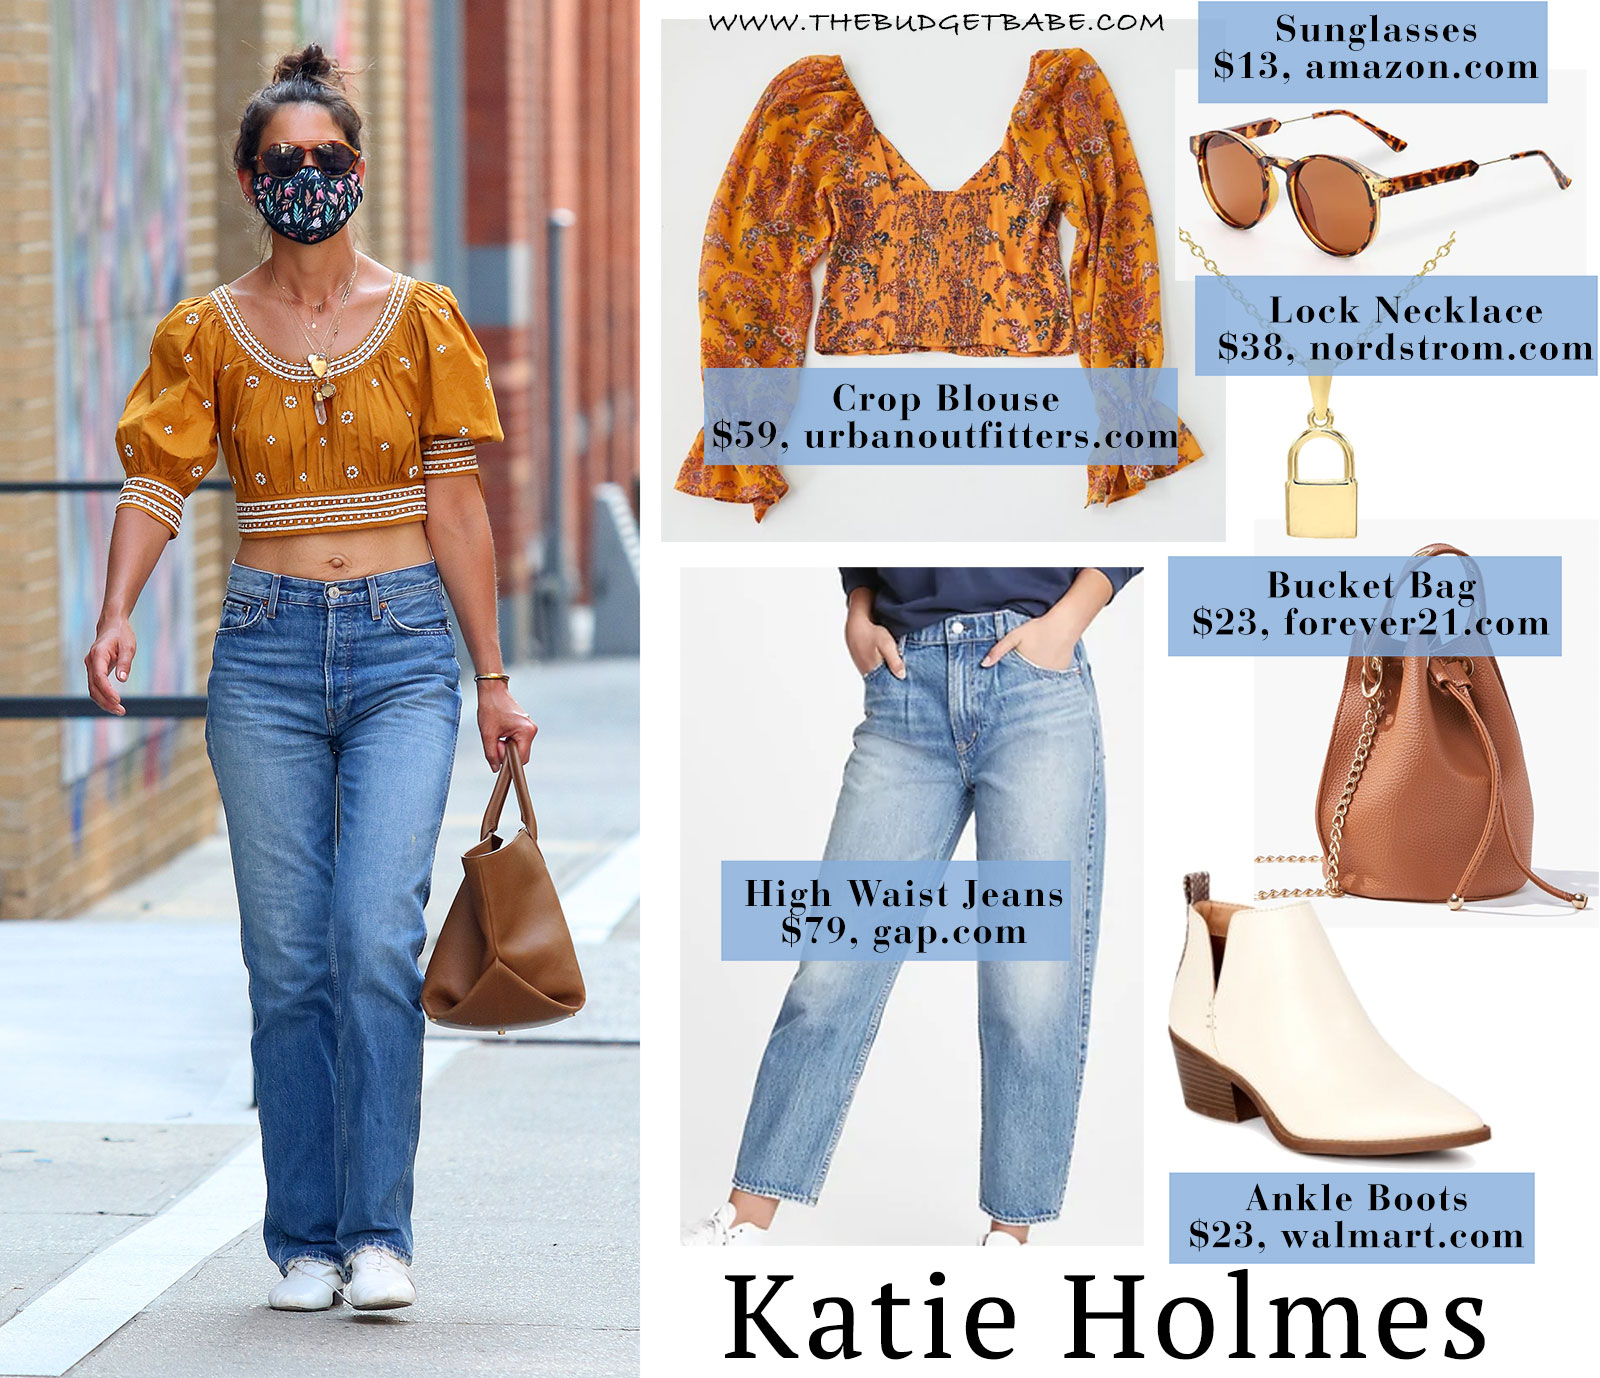 Katie Holmes boho top and high waist jeans